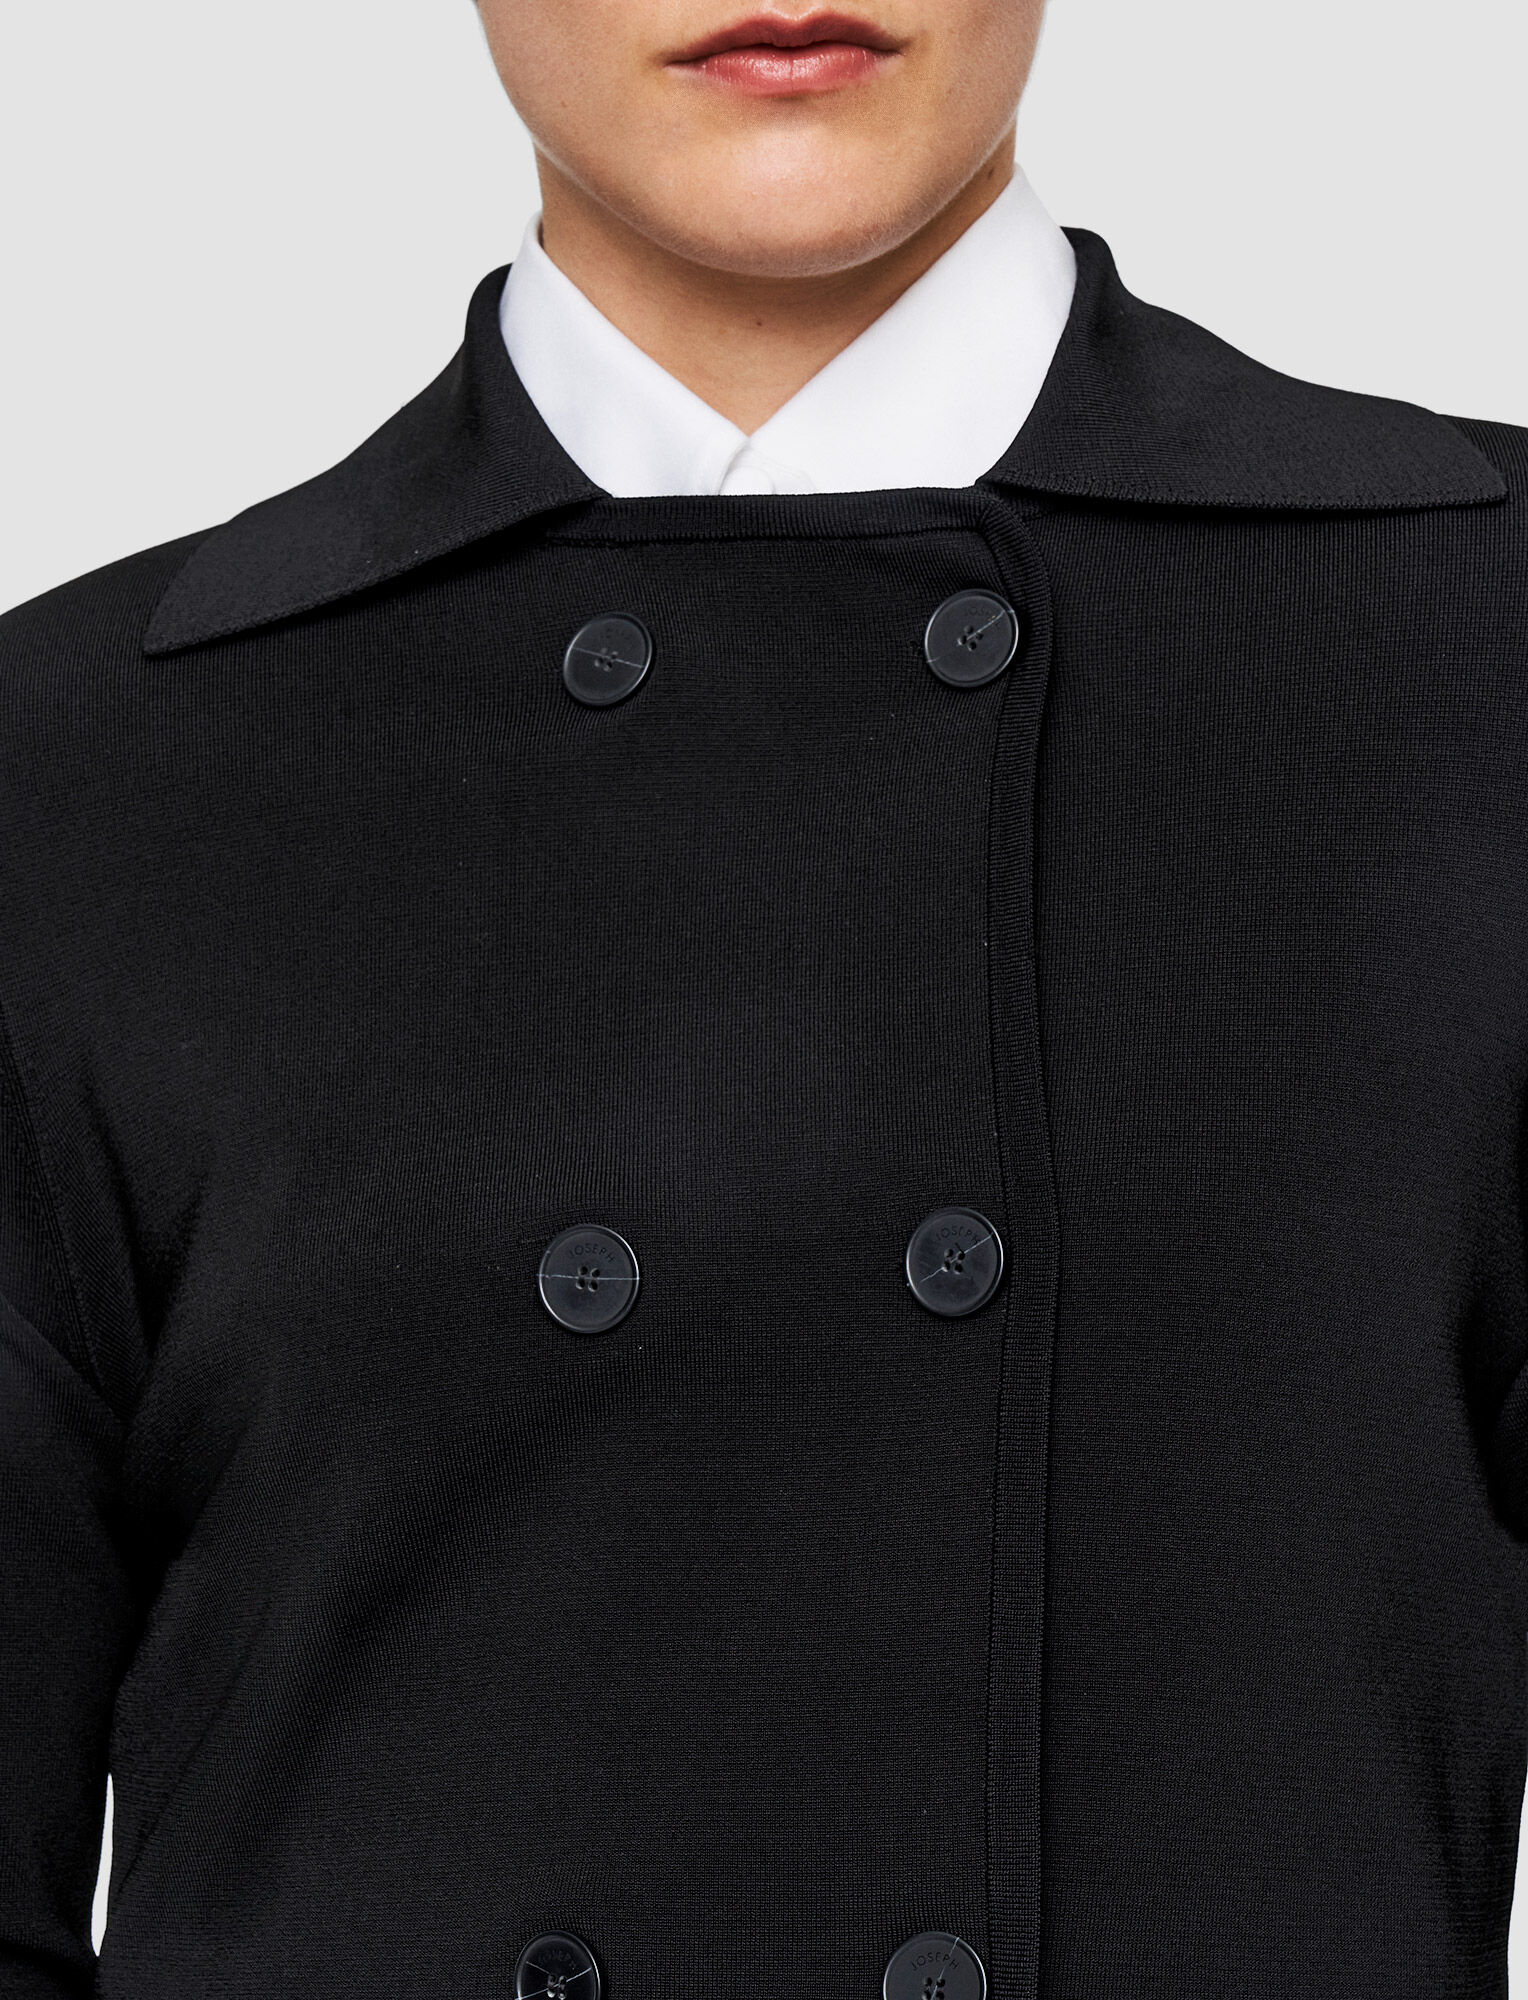 Joseph, Milano Knit Short Jacket, in Black